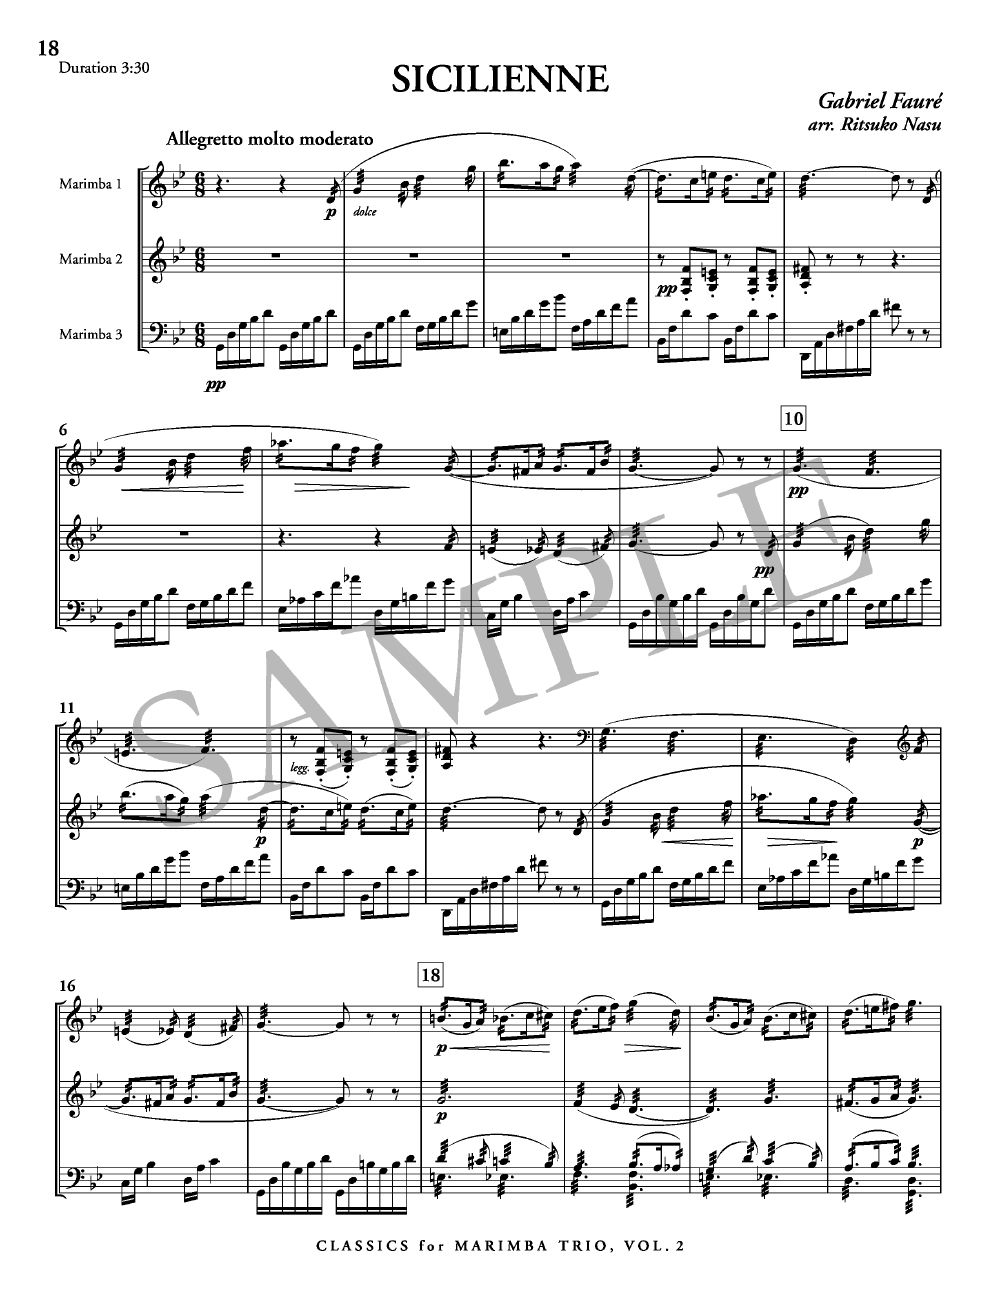 Classics for Marimba Trio #2